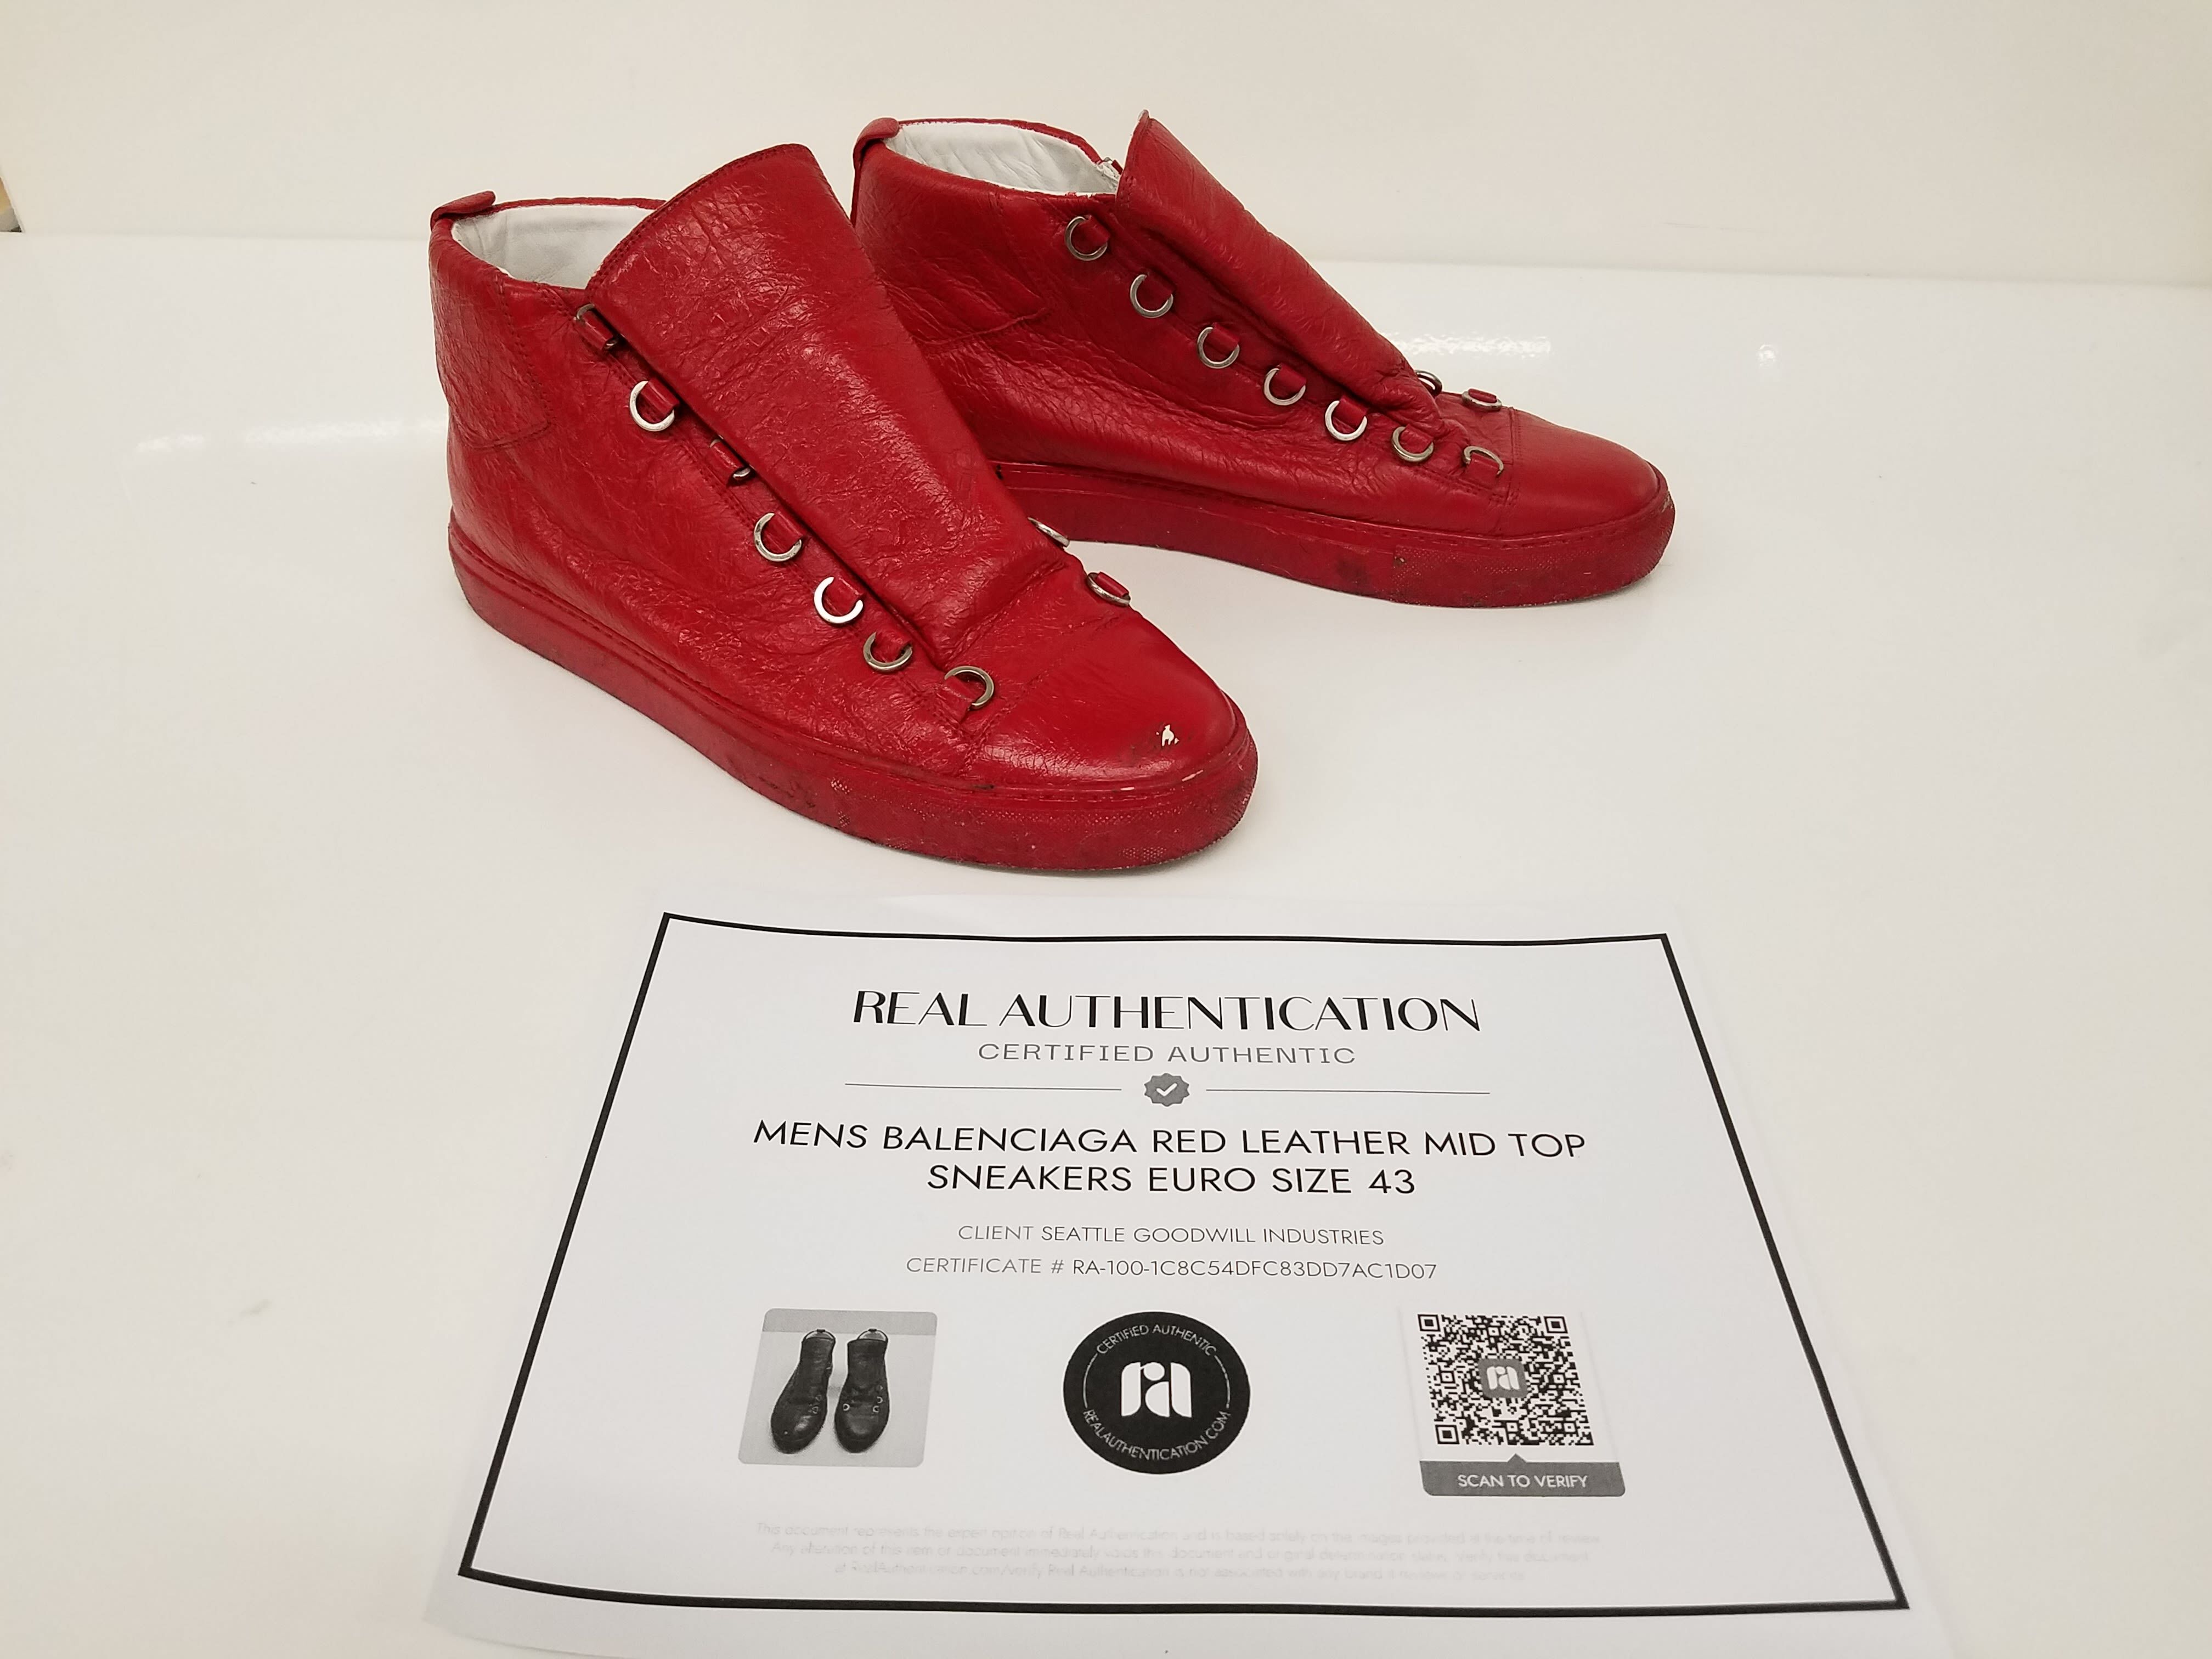 Buy BUWCH Men Red Sneakers-9 UK (43 1/3 EU) 94_RED9 at Amazon.in